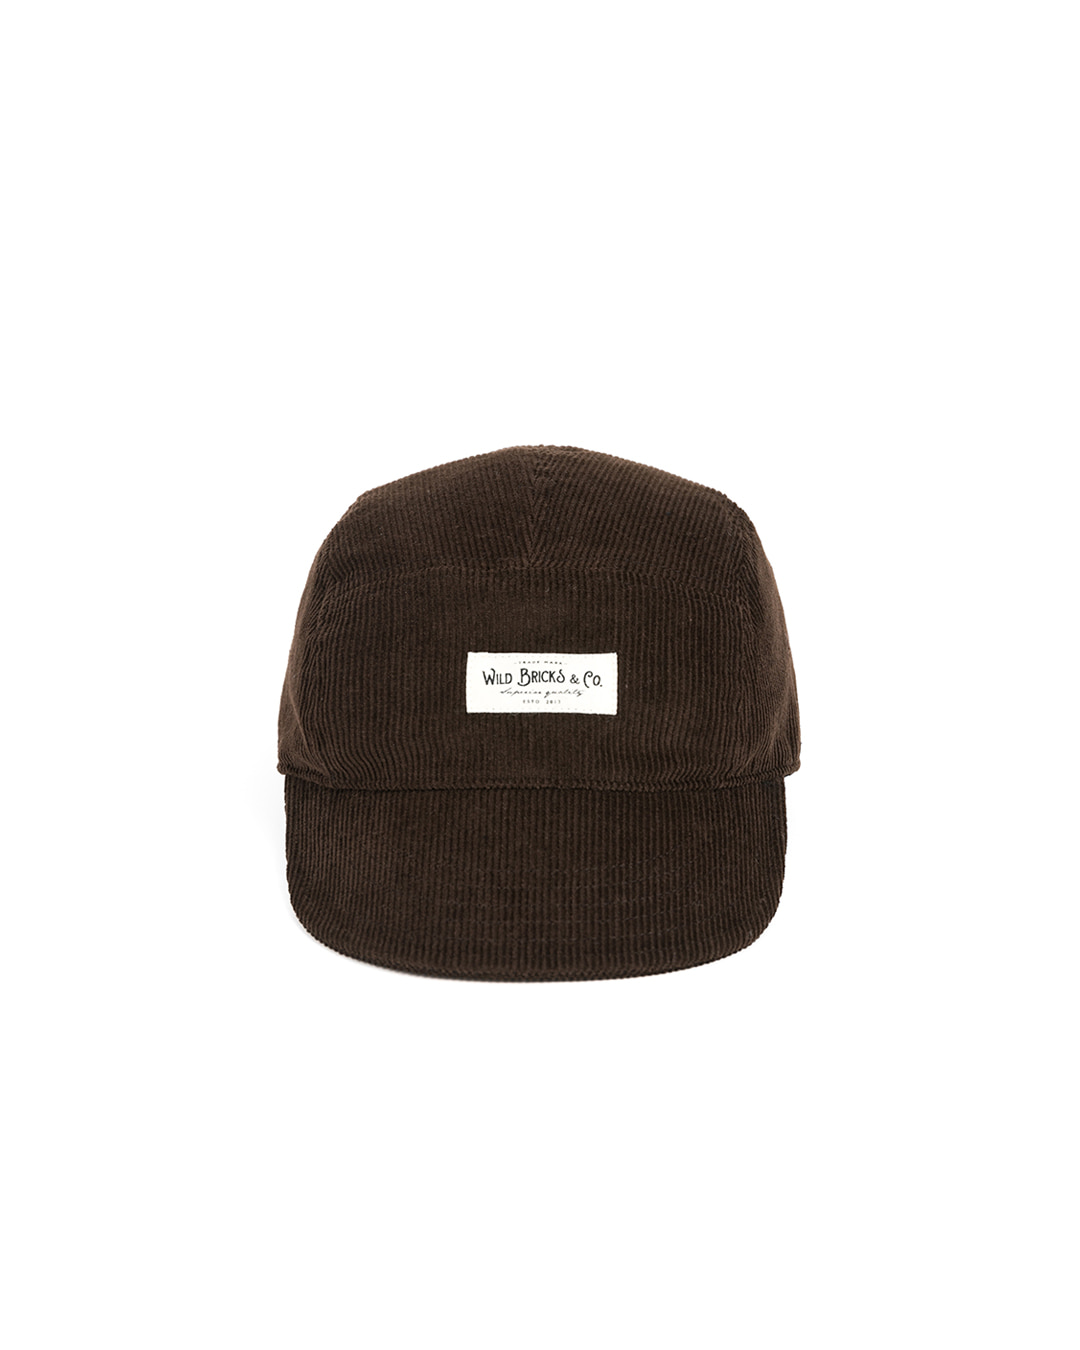 PL CORDUROY CAMP CAP (brown)